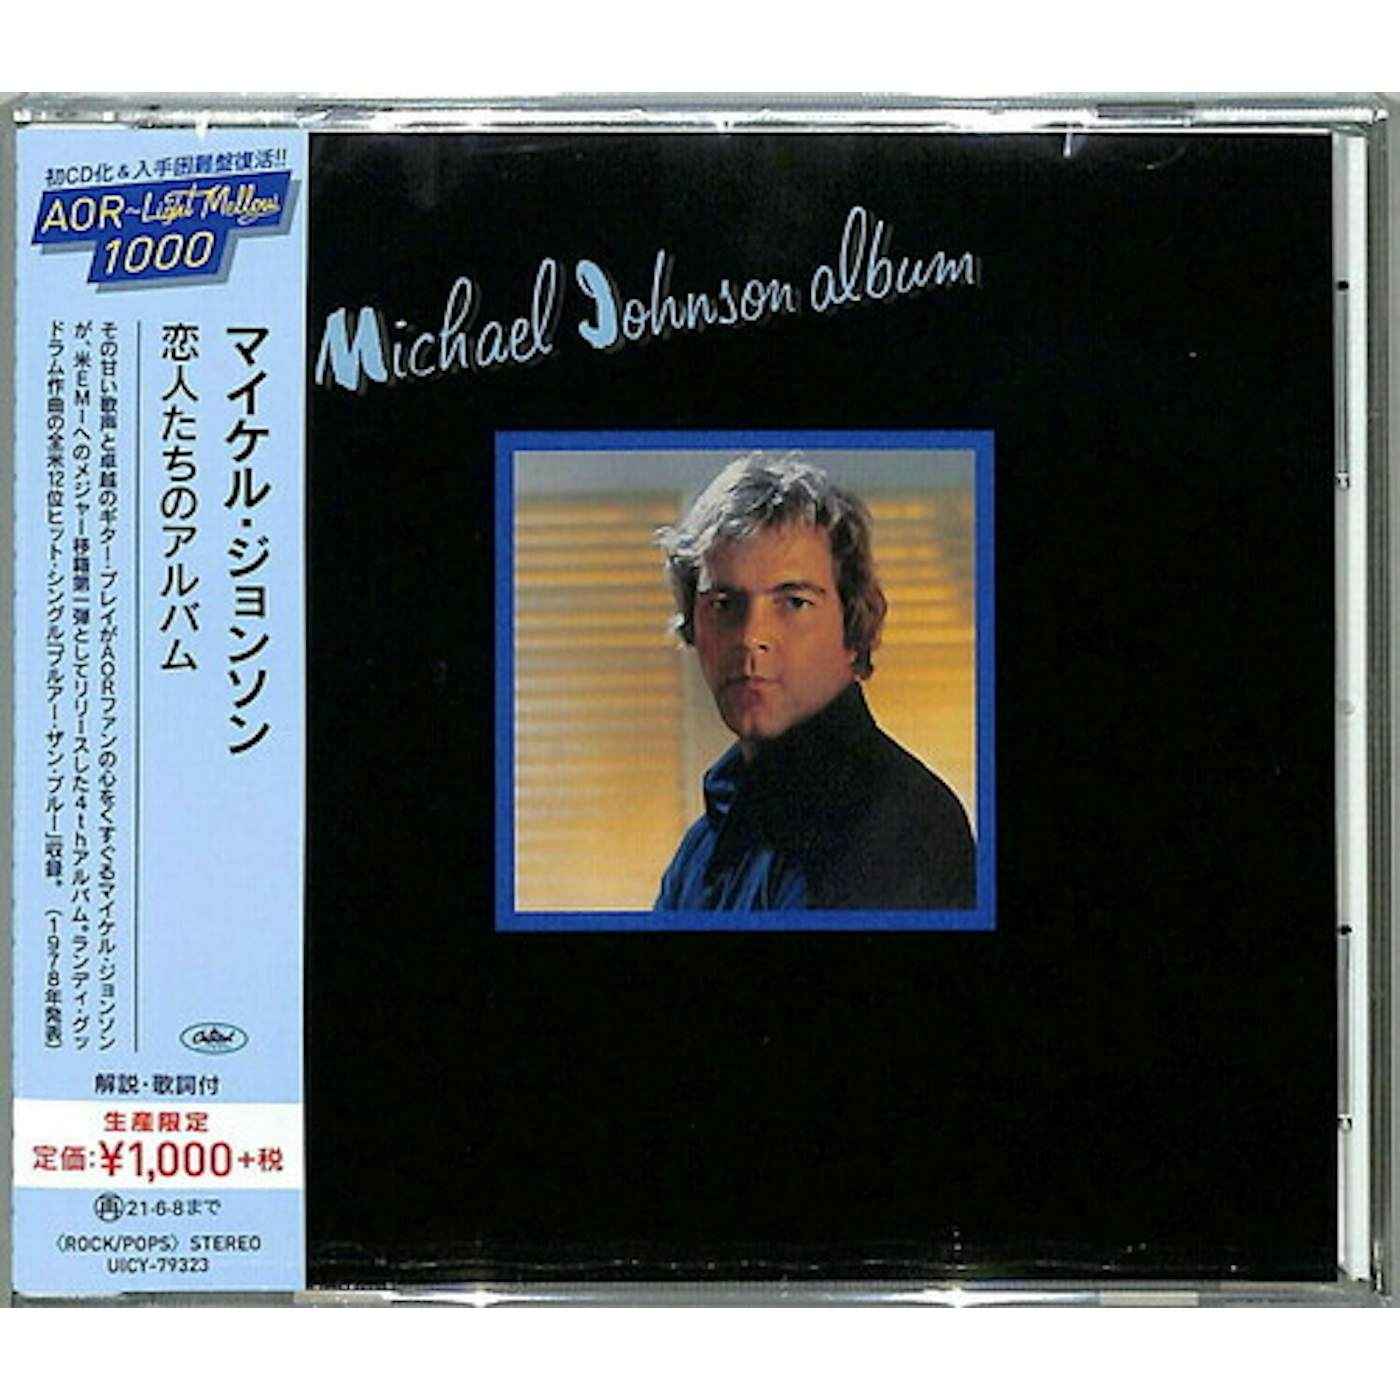 MICHAEL JOHNSON ALBUM CD